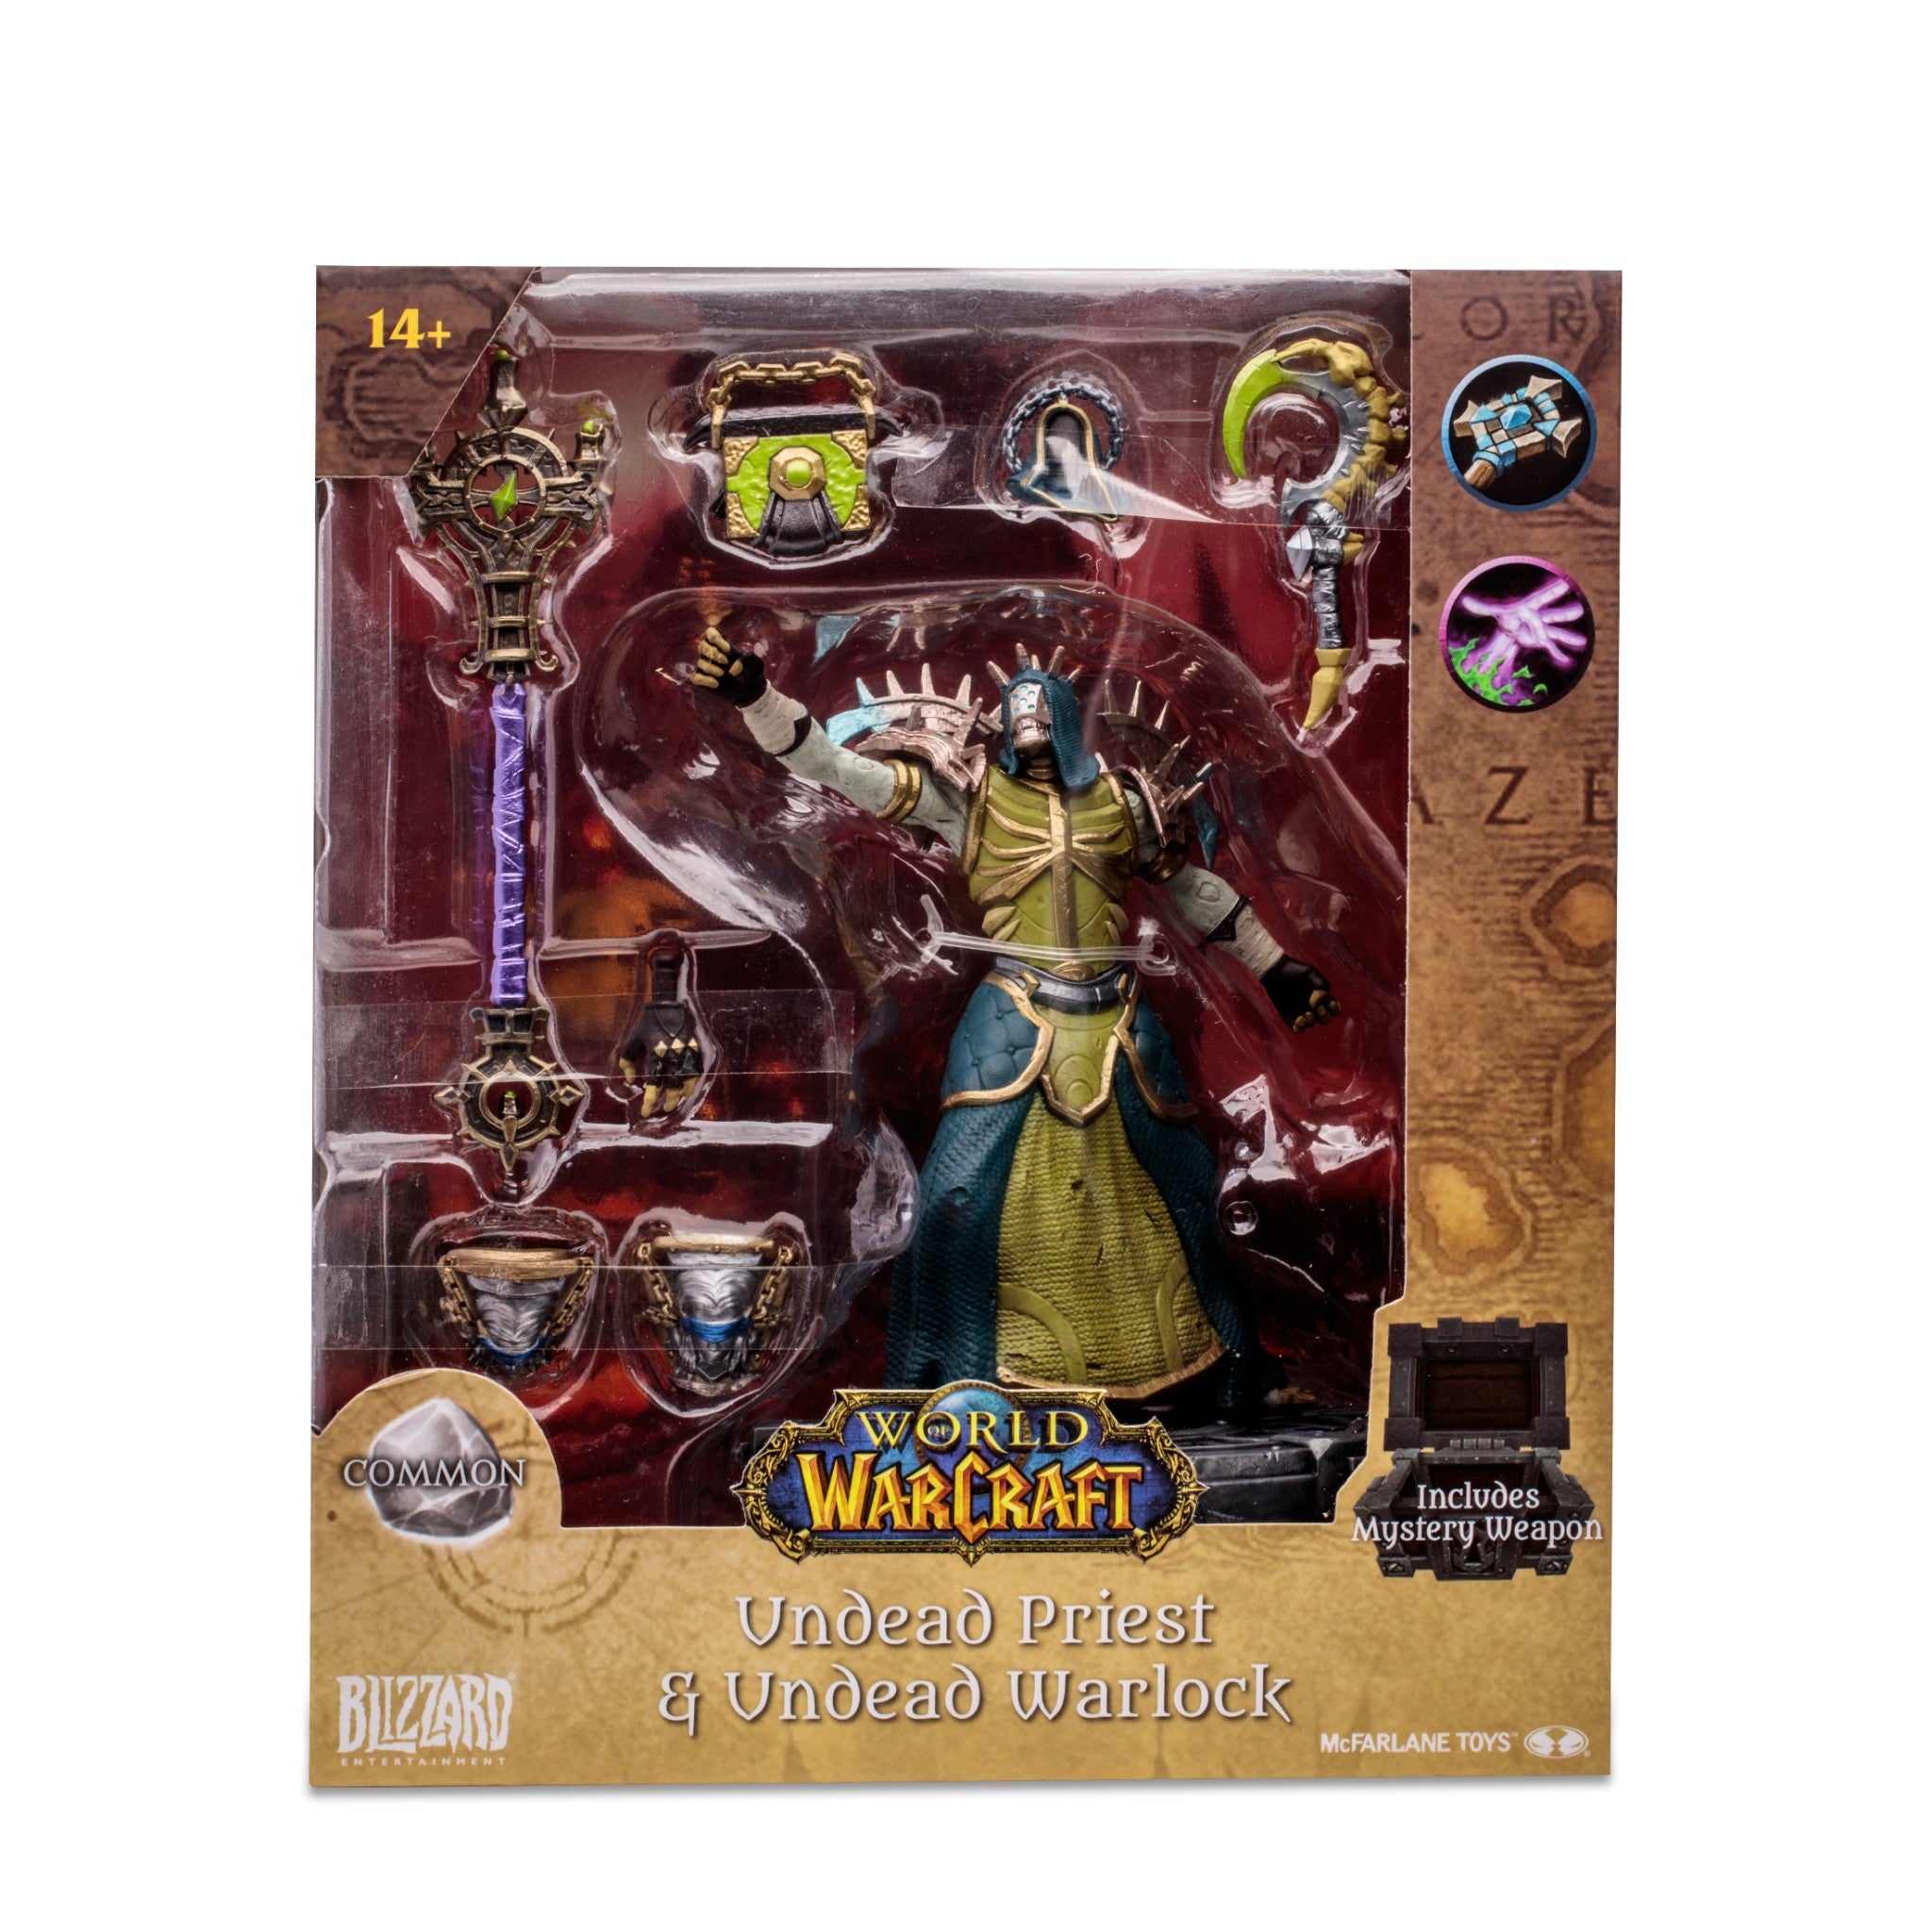 World of Warcraft Undead Priest Warlock 7" Common Figure - McFarlane Toys